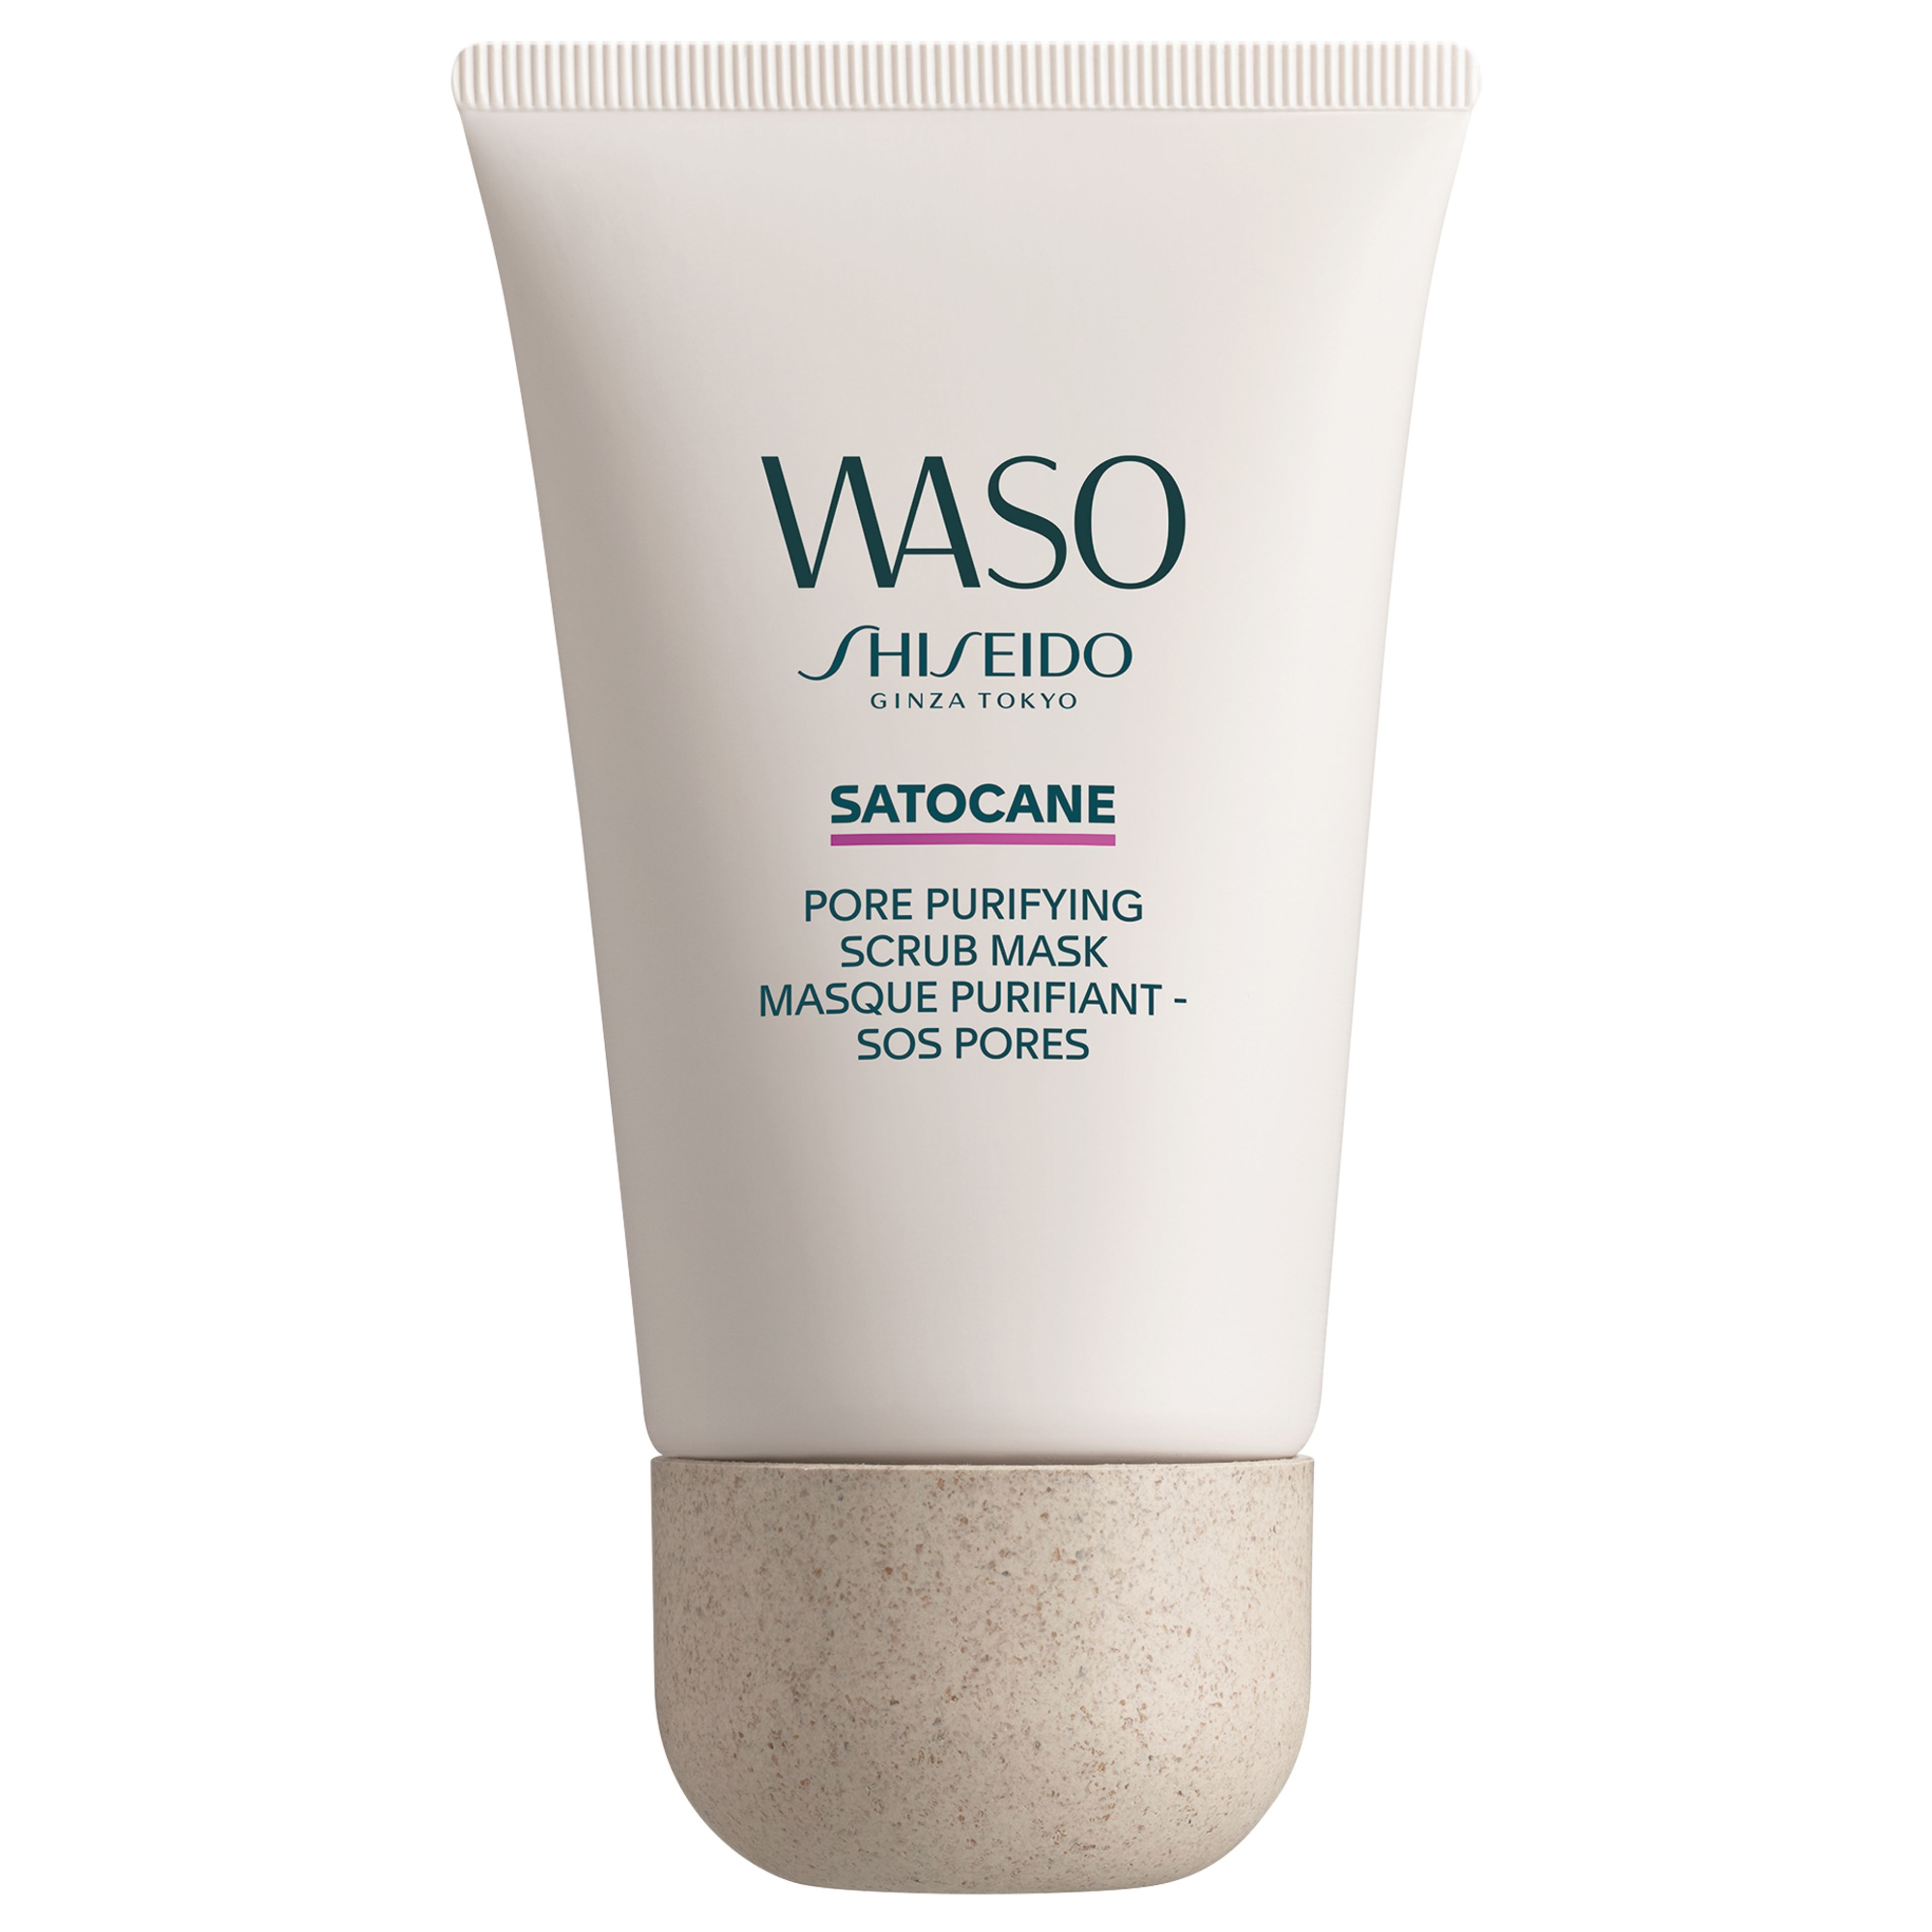 Shiseido Waso Pore Purifying Scrub Mask - Maschera Purificante 1